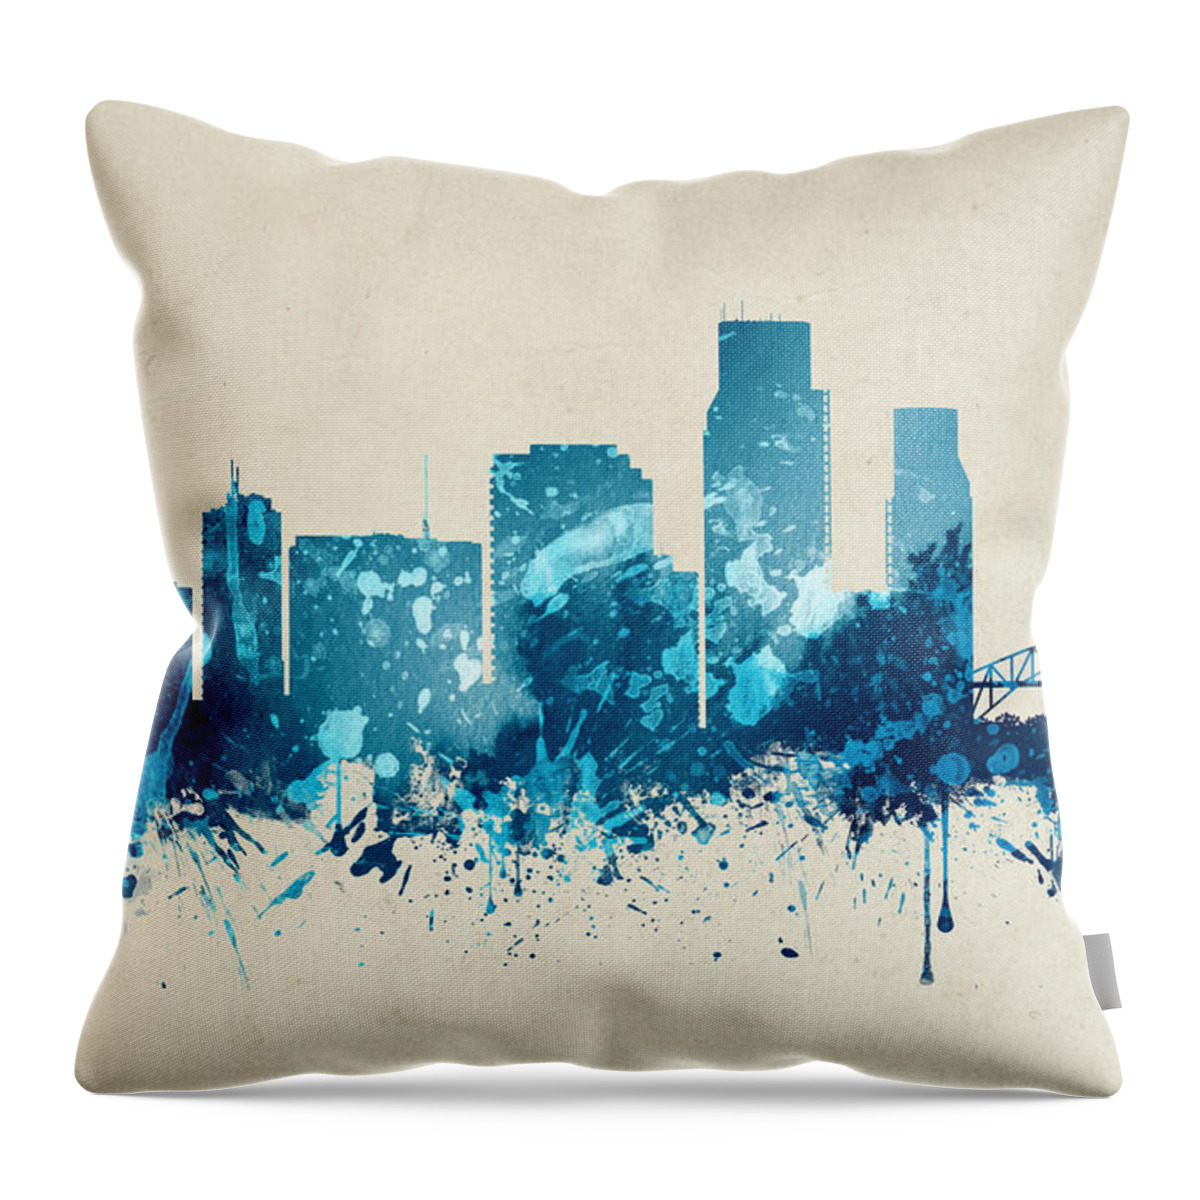 Corpus Christi Throw Pillow featuring the painting Corpus Christi Texas Skyline 20 by Aged Pixel